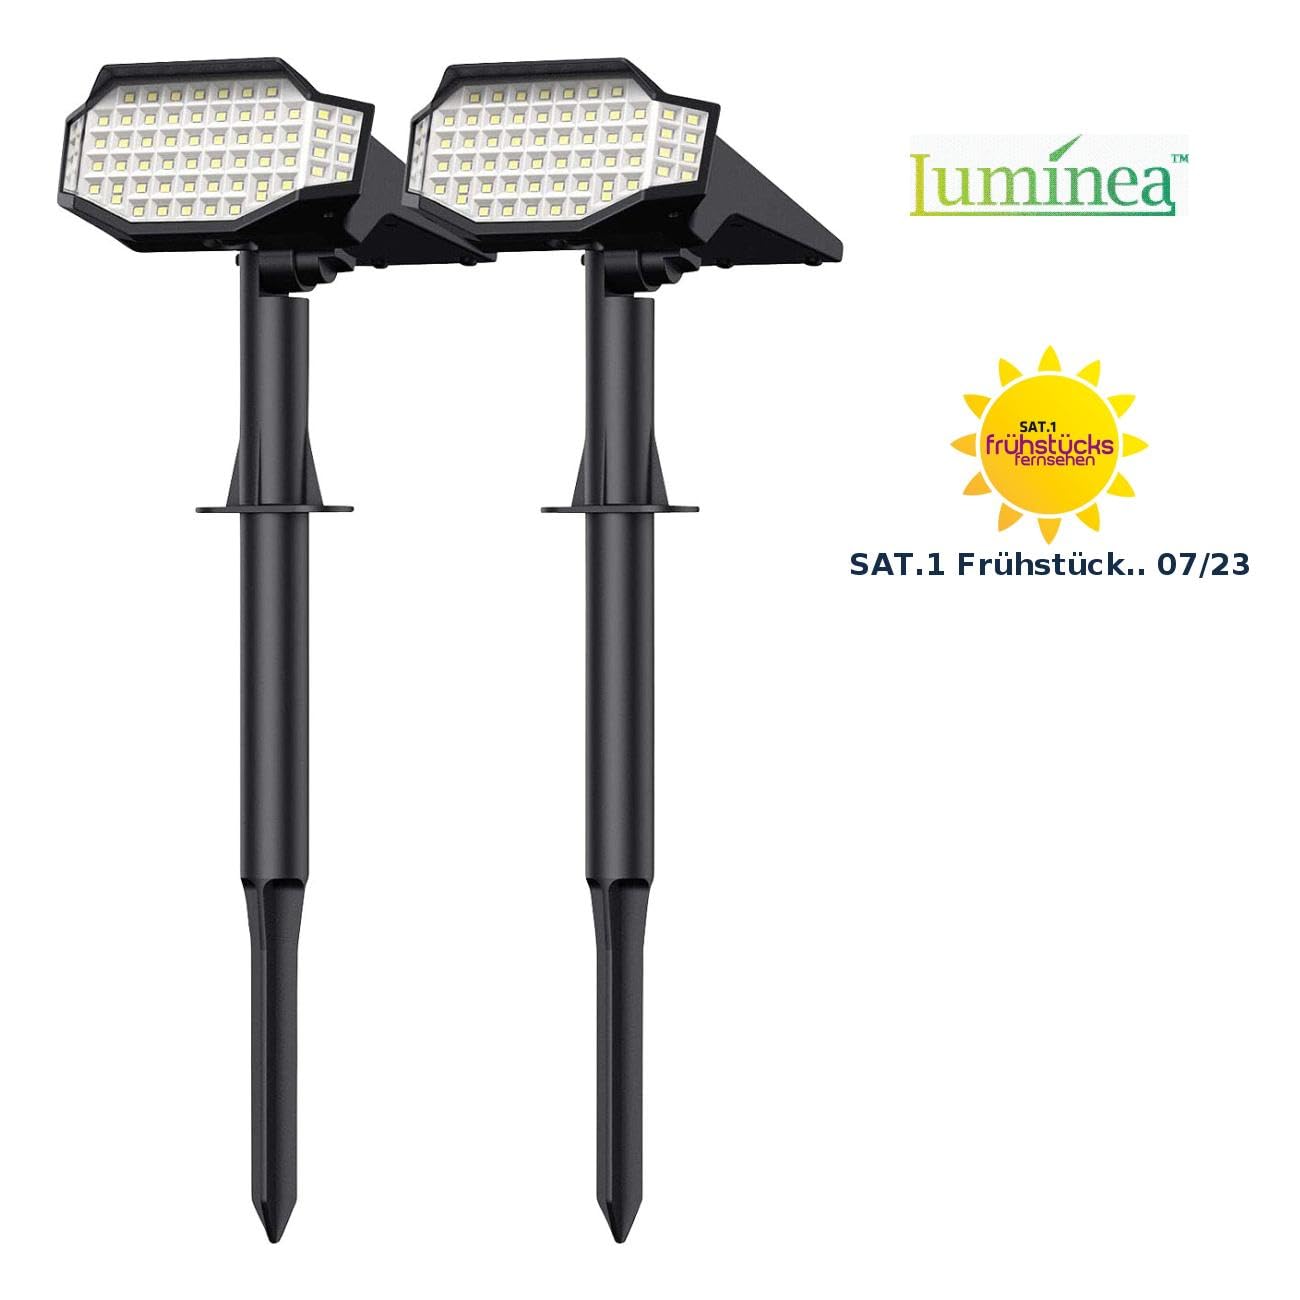 Luminea Solar-Wandlampe außen: 2er-Set High-Power-Solar-LED-Gartenspots, 650 lm, IP65, warmweiß (Solarleuchte Weg Beleuchtung, Hausbeleuchtung außen Solar, Gartenleuchte Standleuchte)